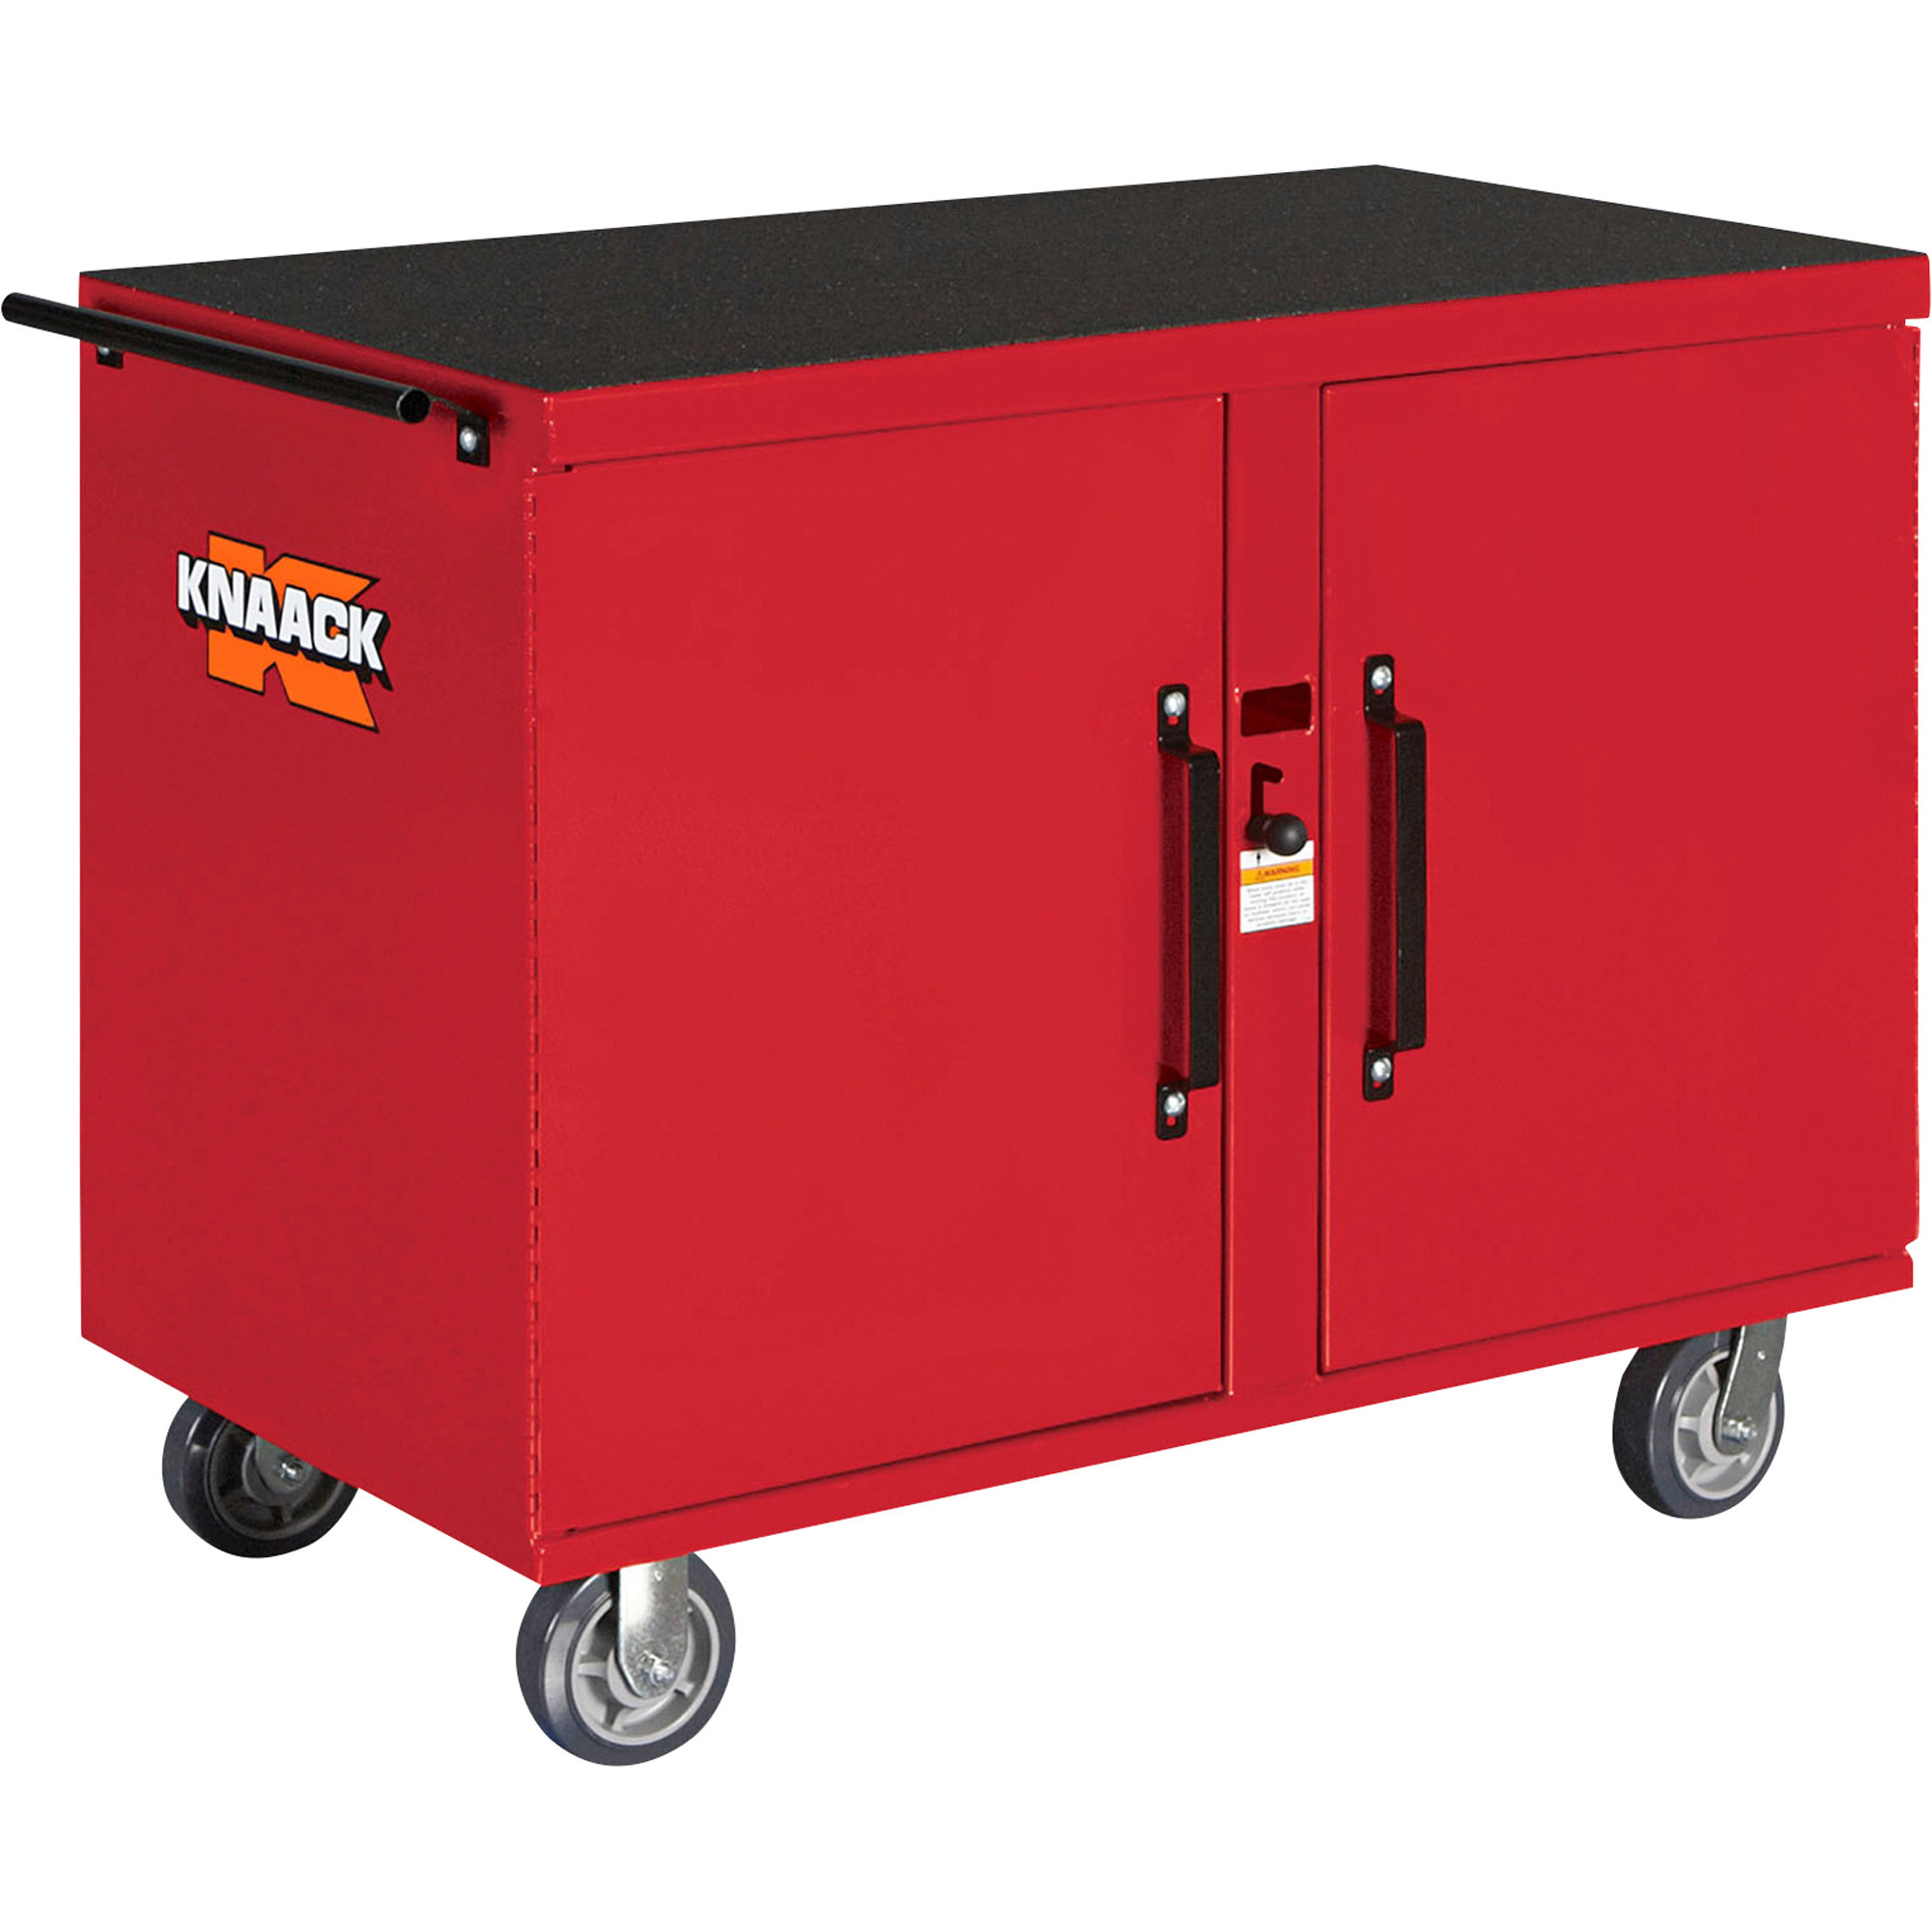 Storagemaster 1000-Lb. Capacity Rolling Mechanics Chest — Red, 46 1/4Inch W x 25Inch D x 37 1/2Inch H, Model - KNAACK 63